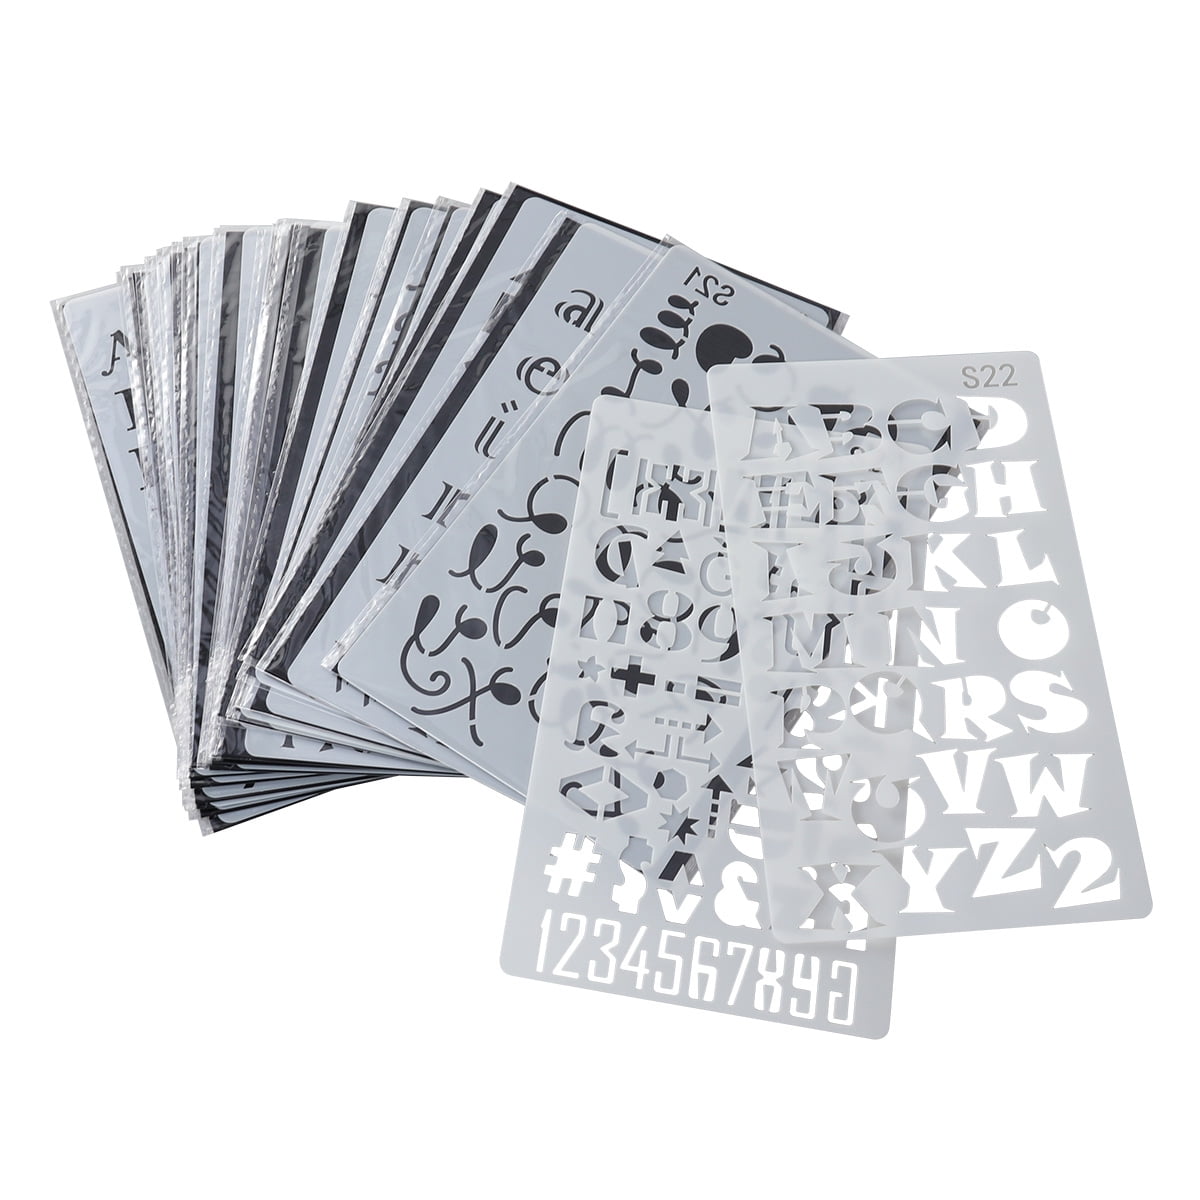 Stencil Alphabets: 100 Complete Fonts [Book]